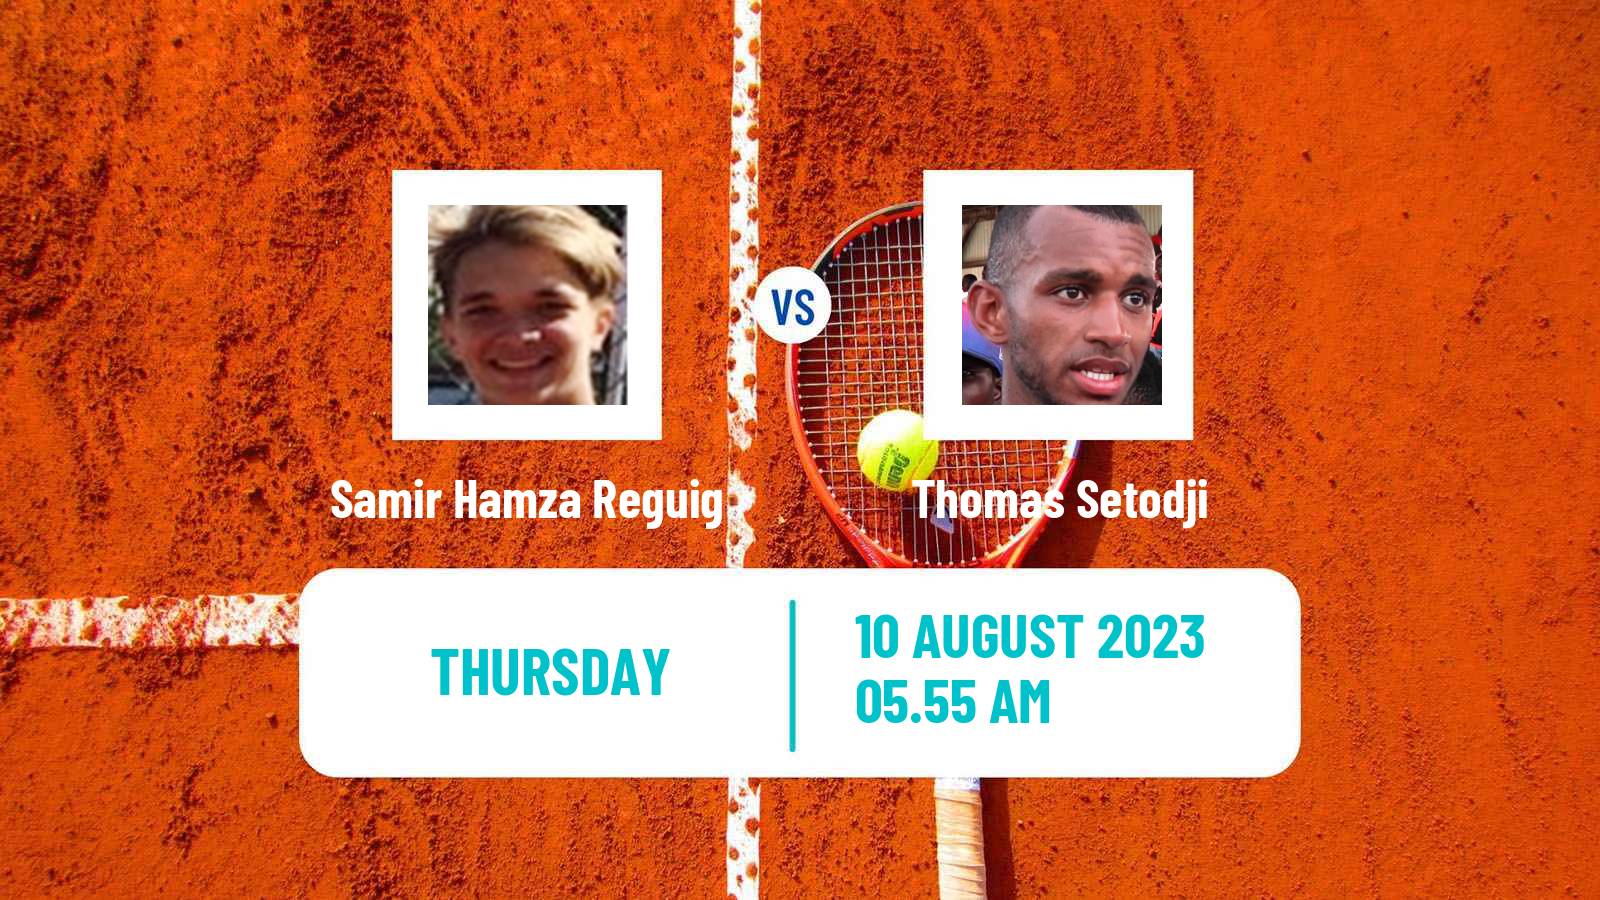 Tennis Davis Cup Group III Samir Hamza Reguig - Thomas Setodji